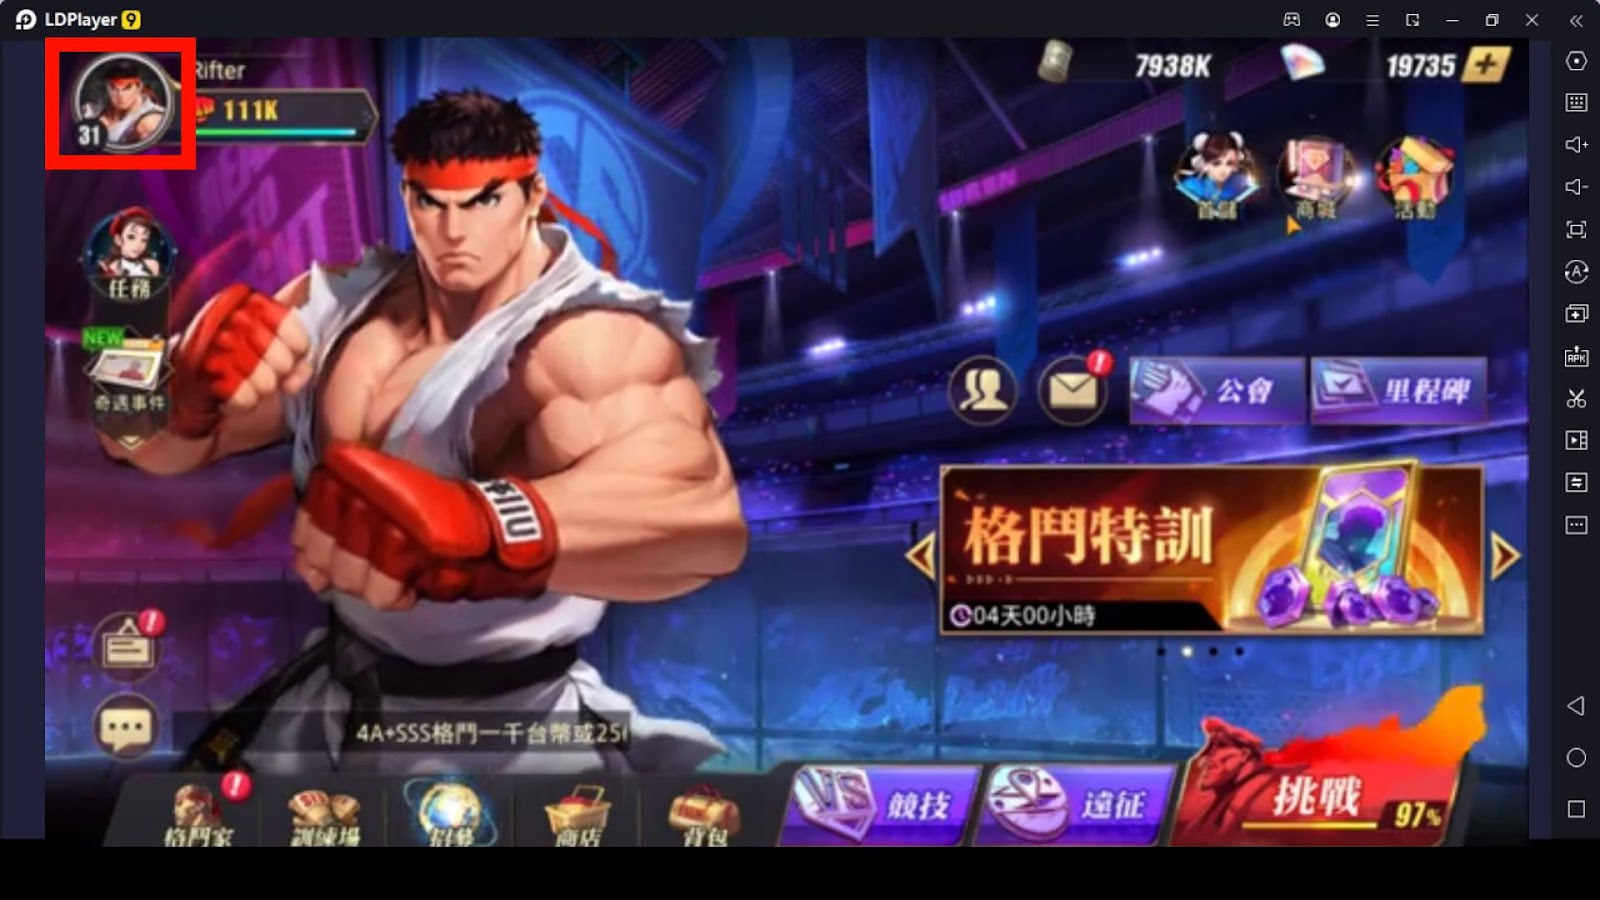 Street Fighter Duel Codes - December 2023 